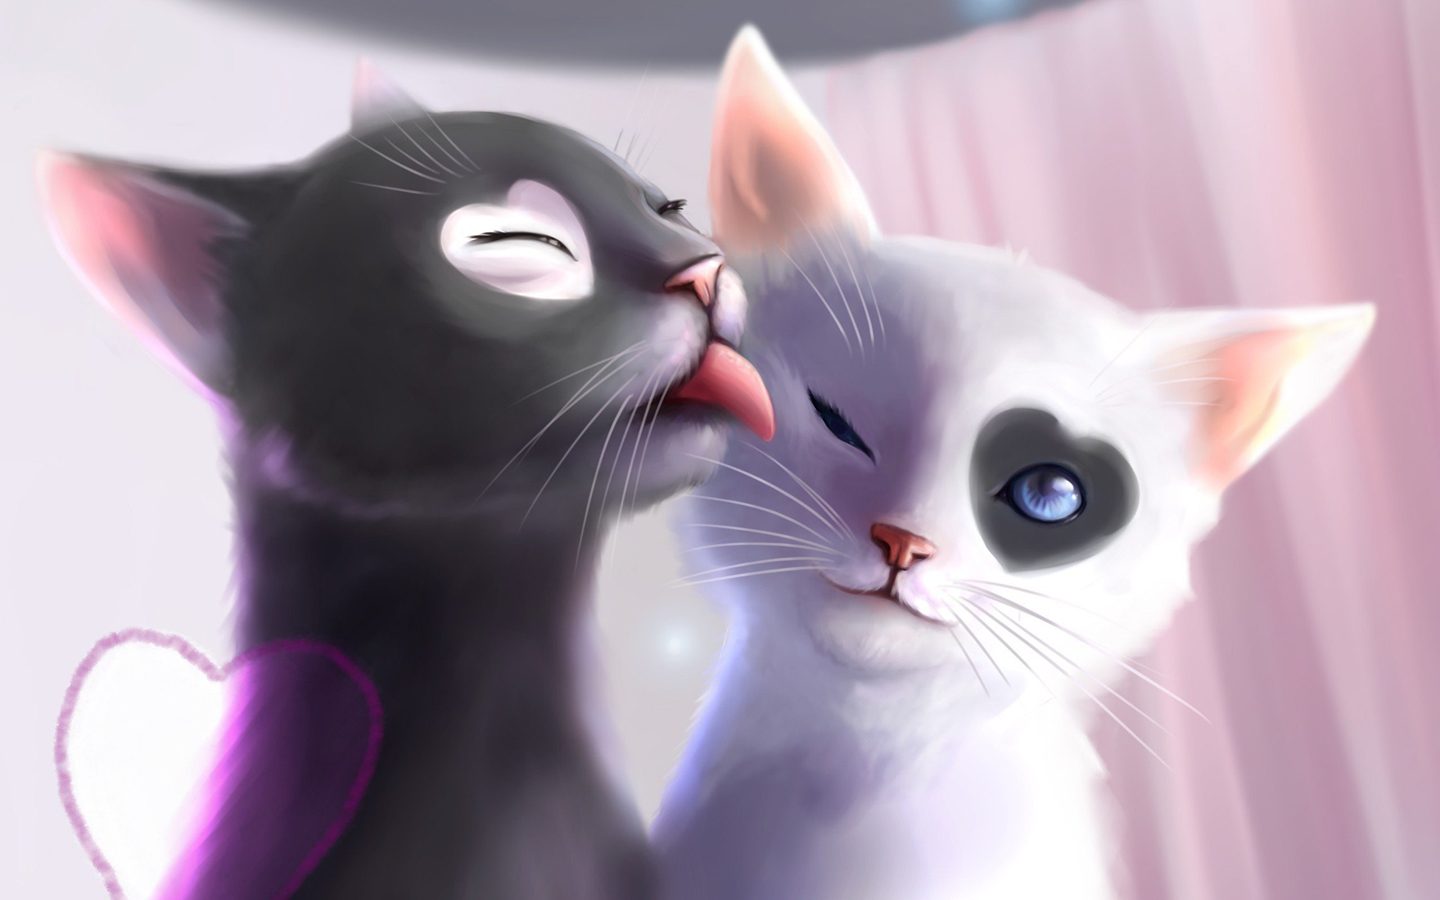 Black & White Cat (Love Heat, kiss, Art) Wallpaper